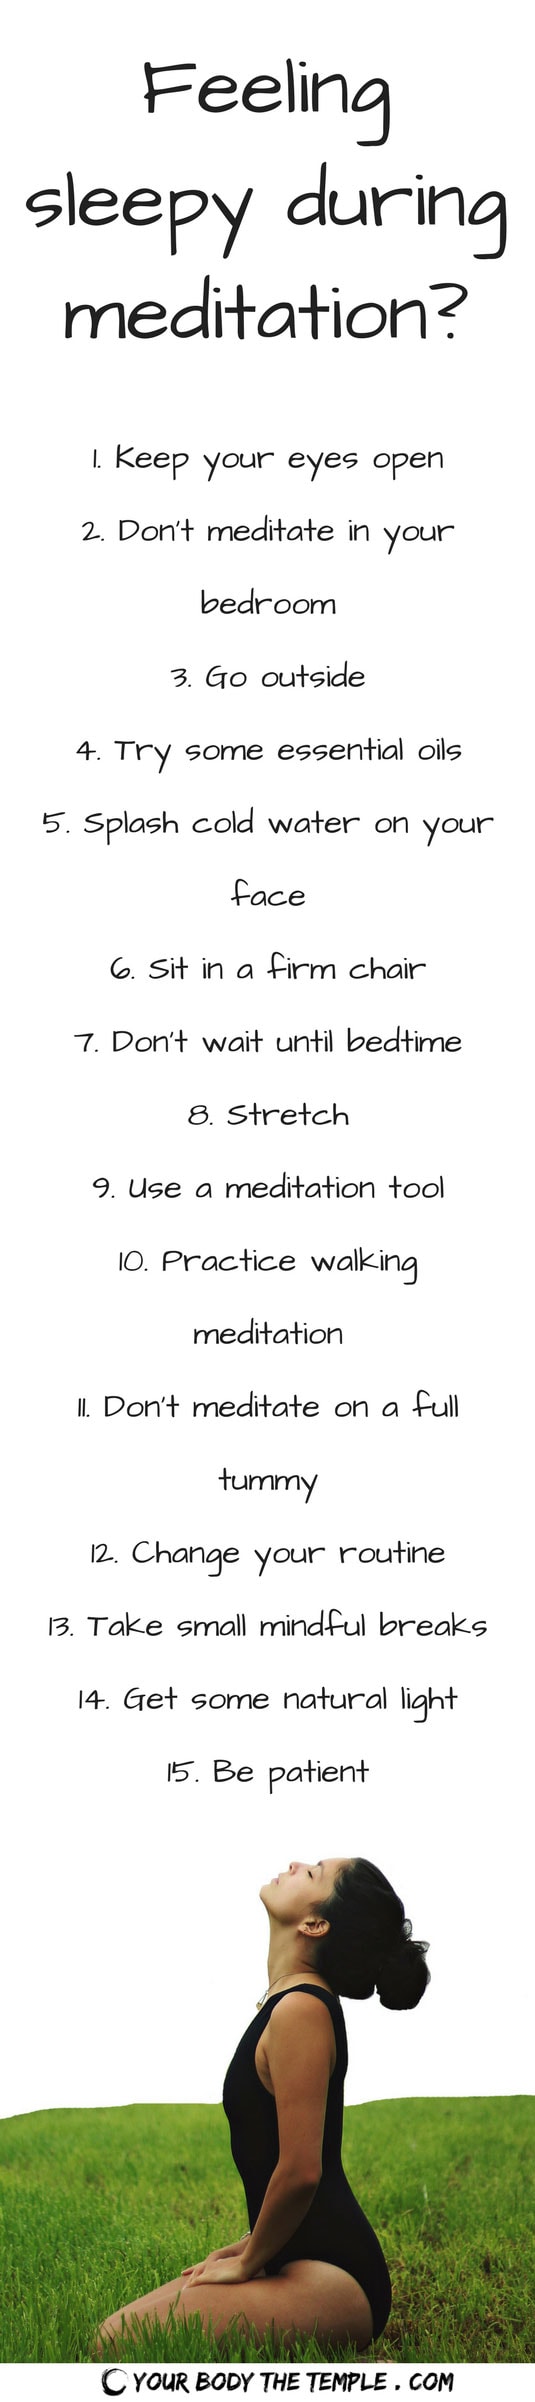 stay awake during meditation